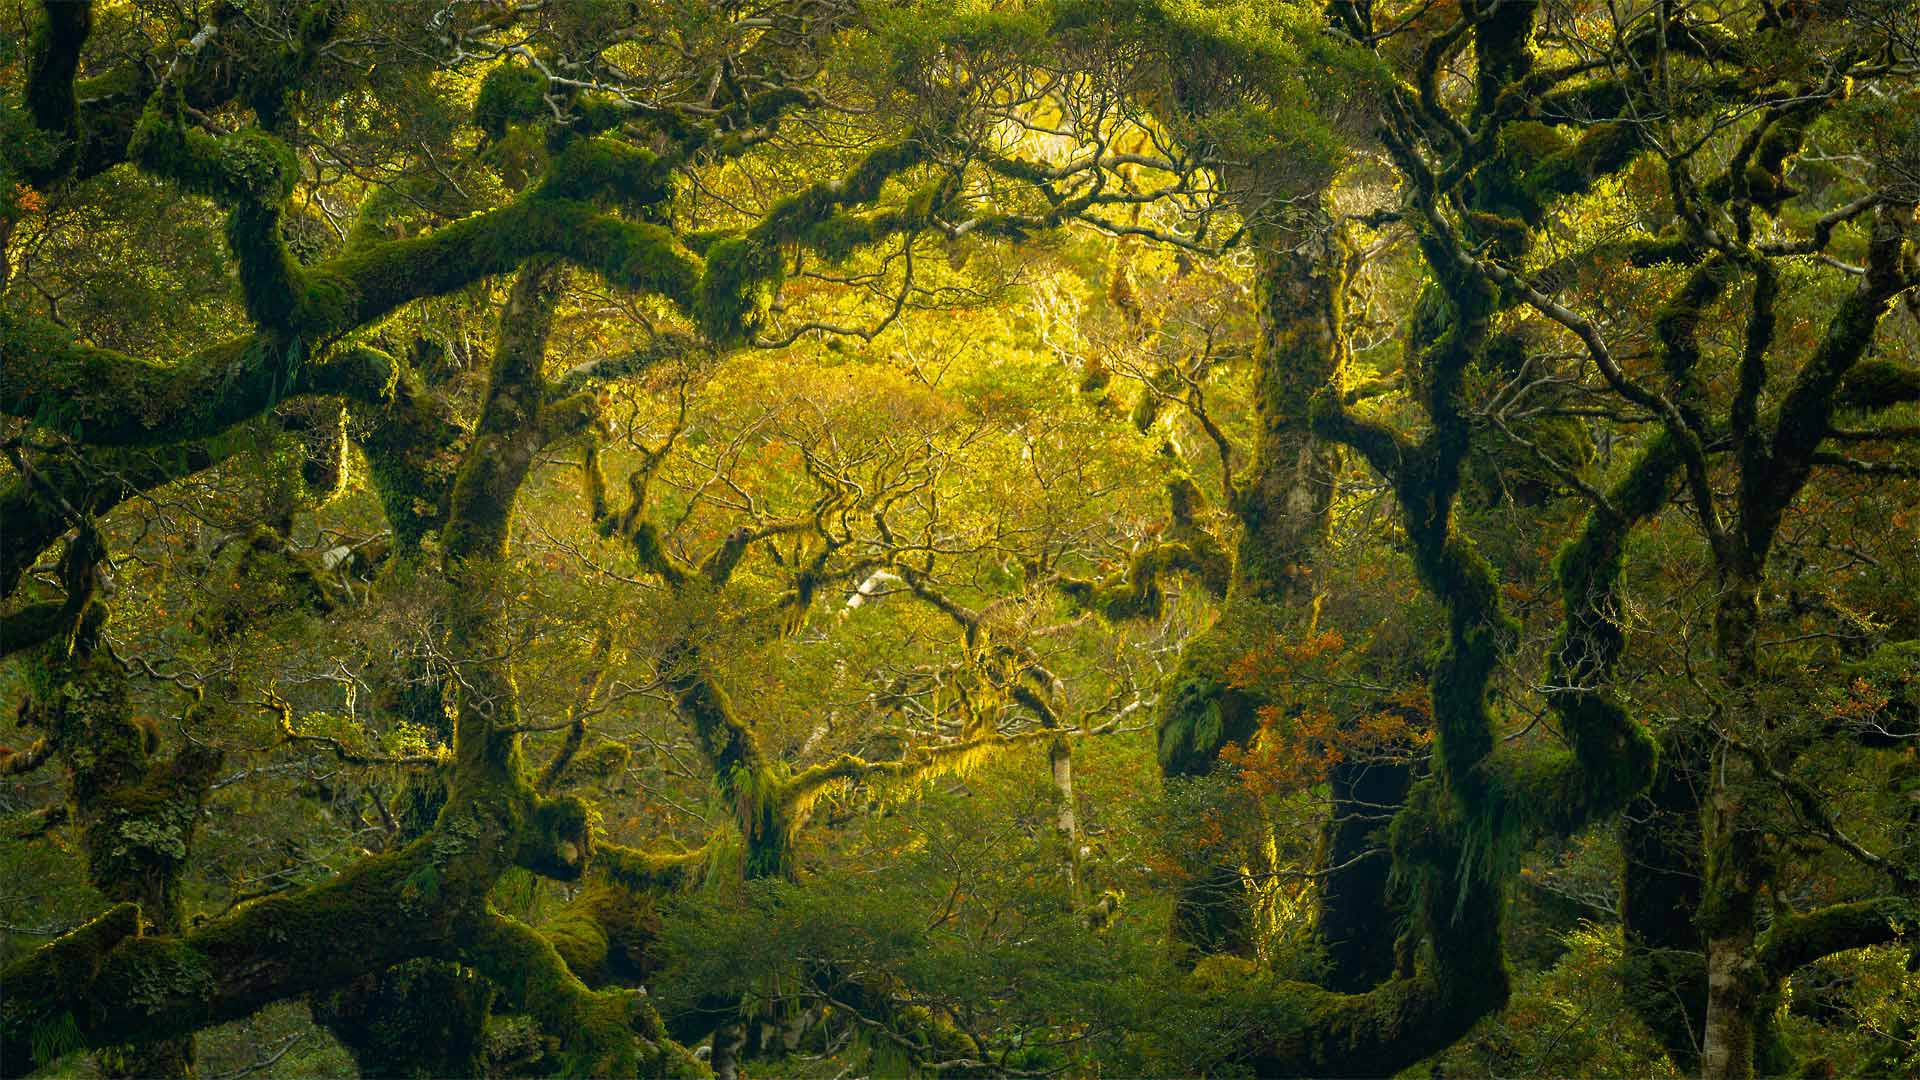 Milford Sound/Piopiotahi rainforest in New Zealand